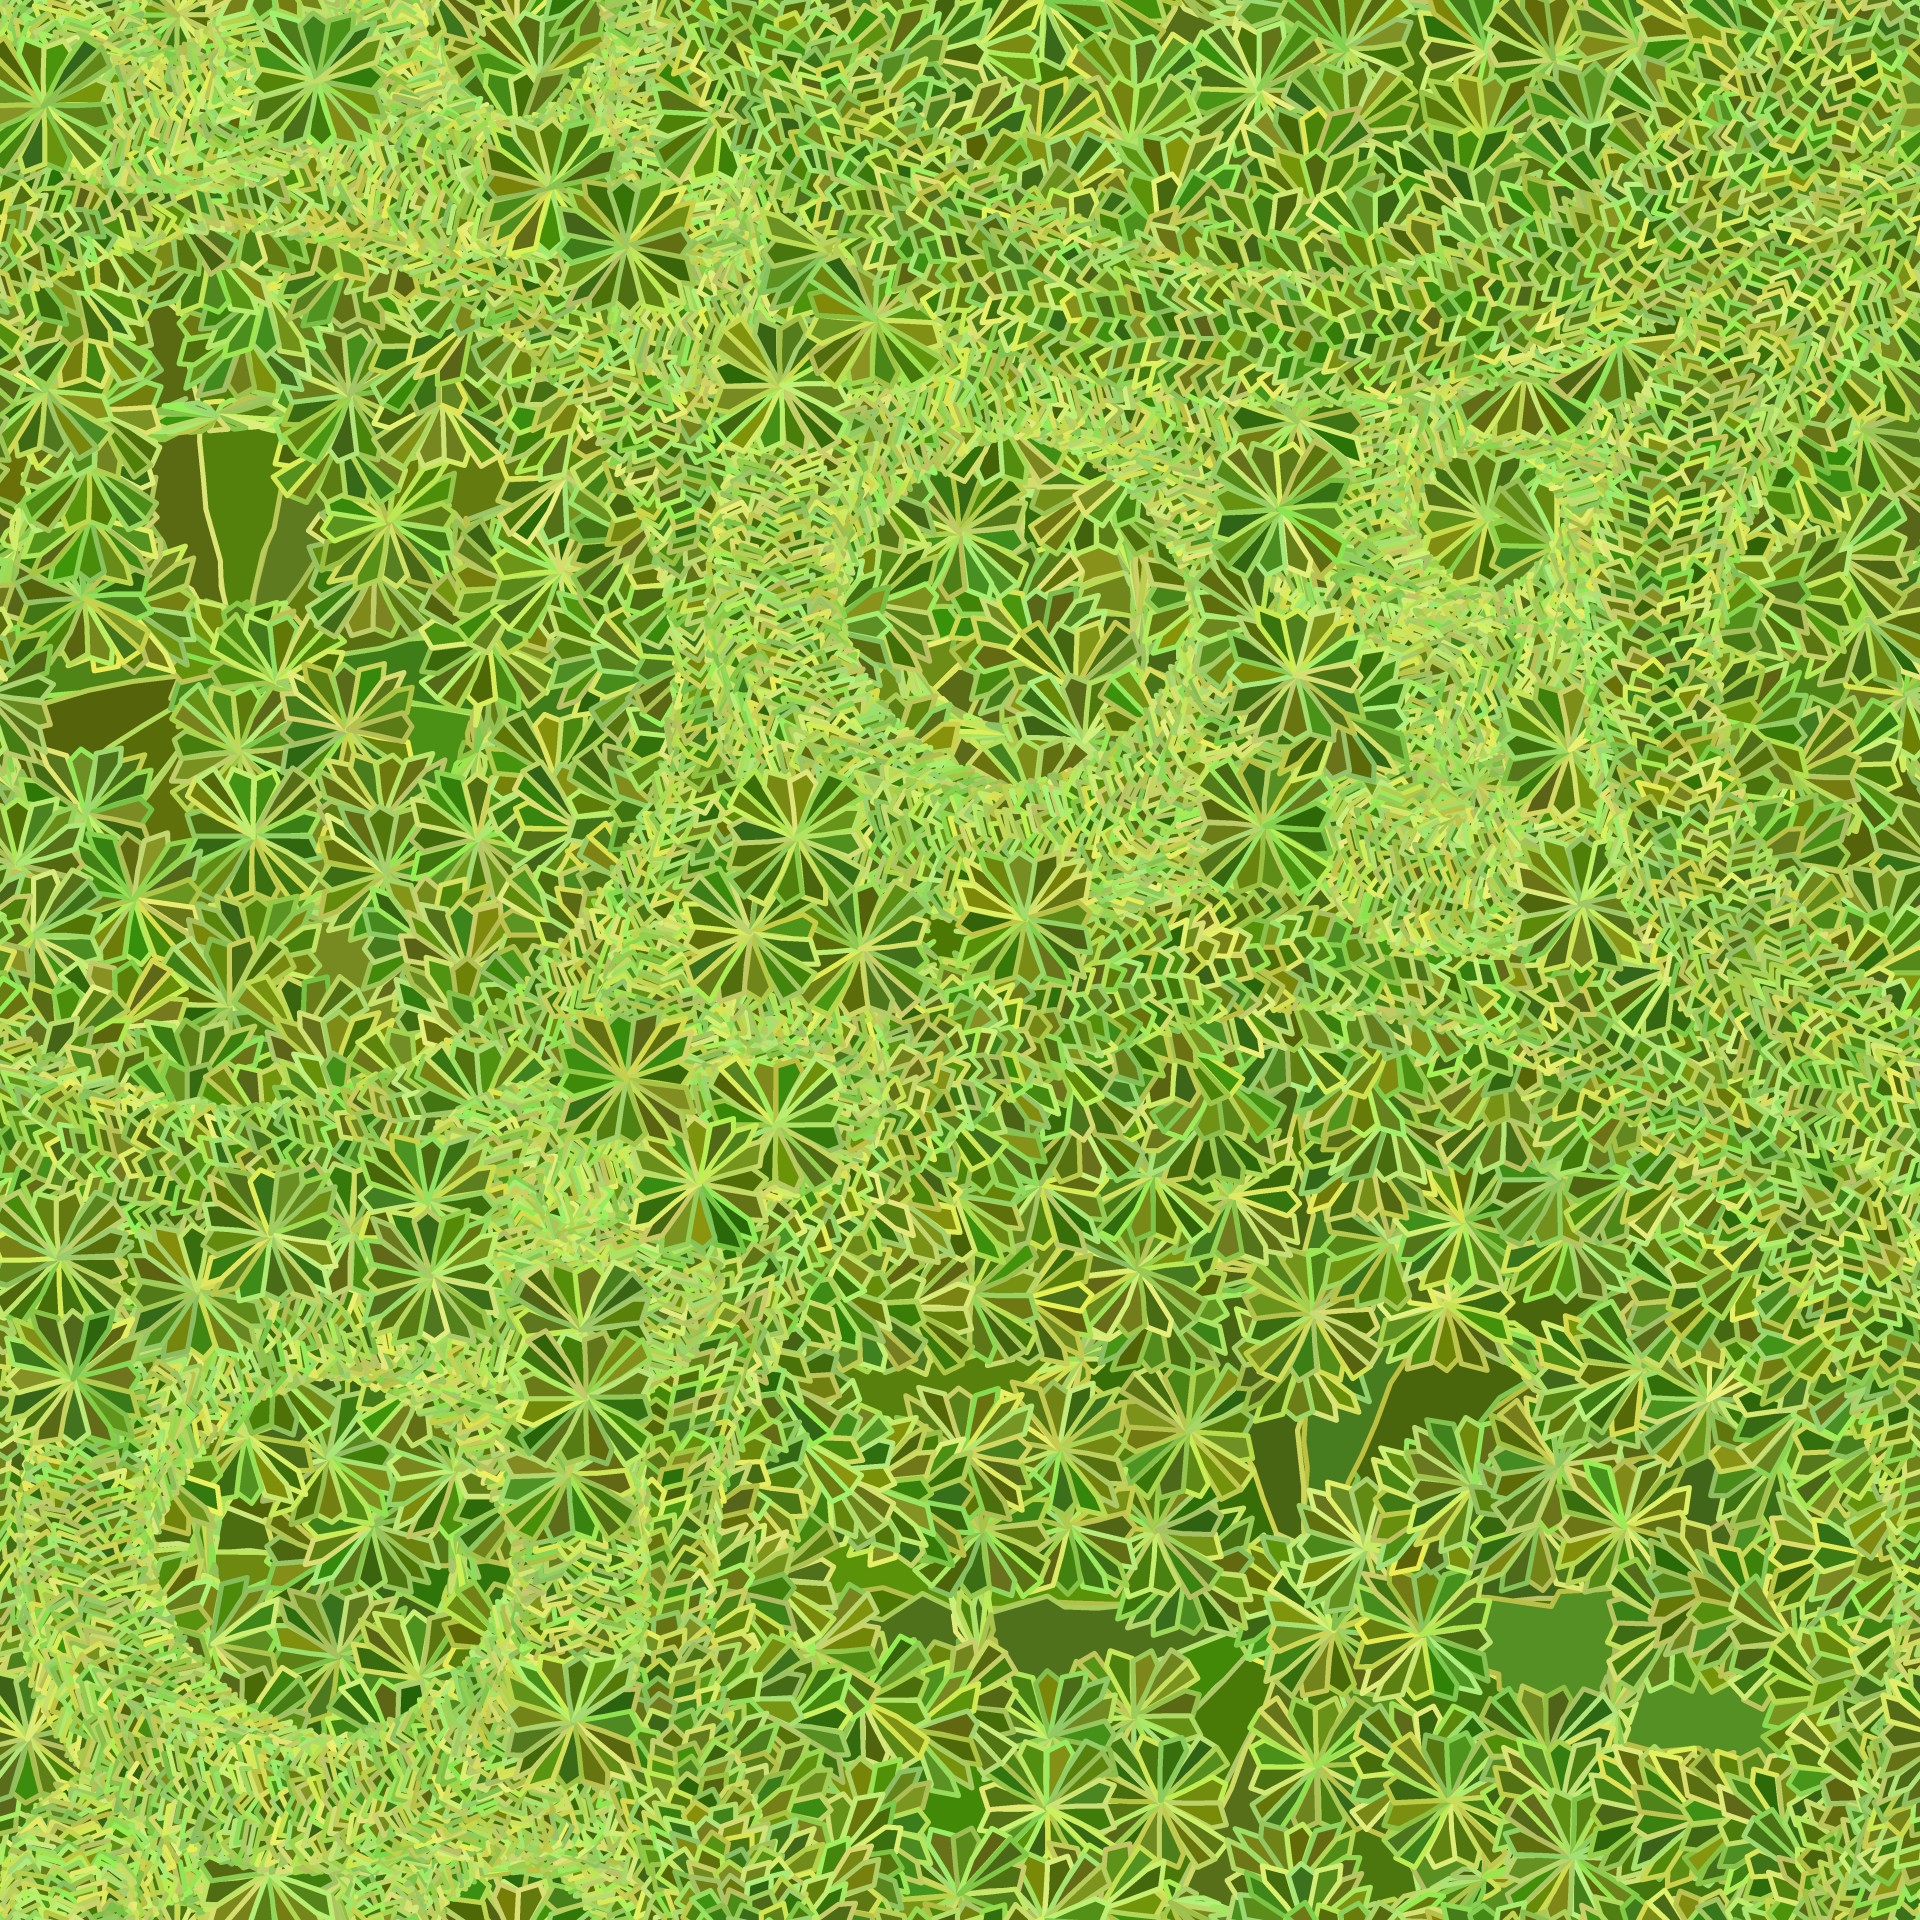 green circles background free photo